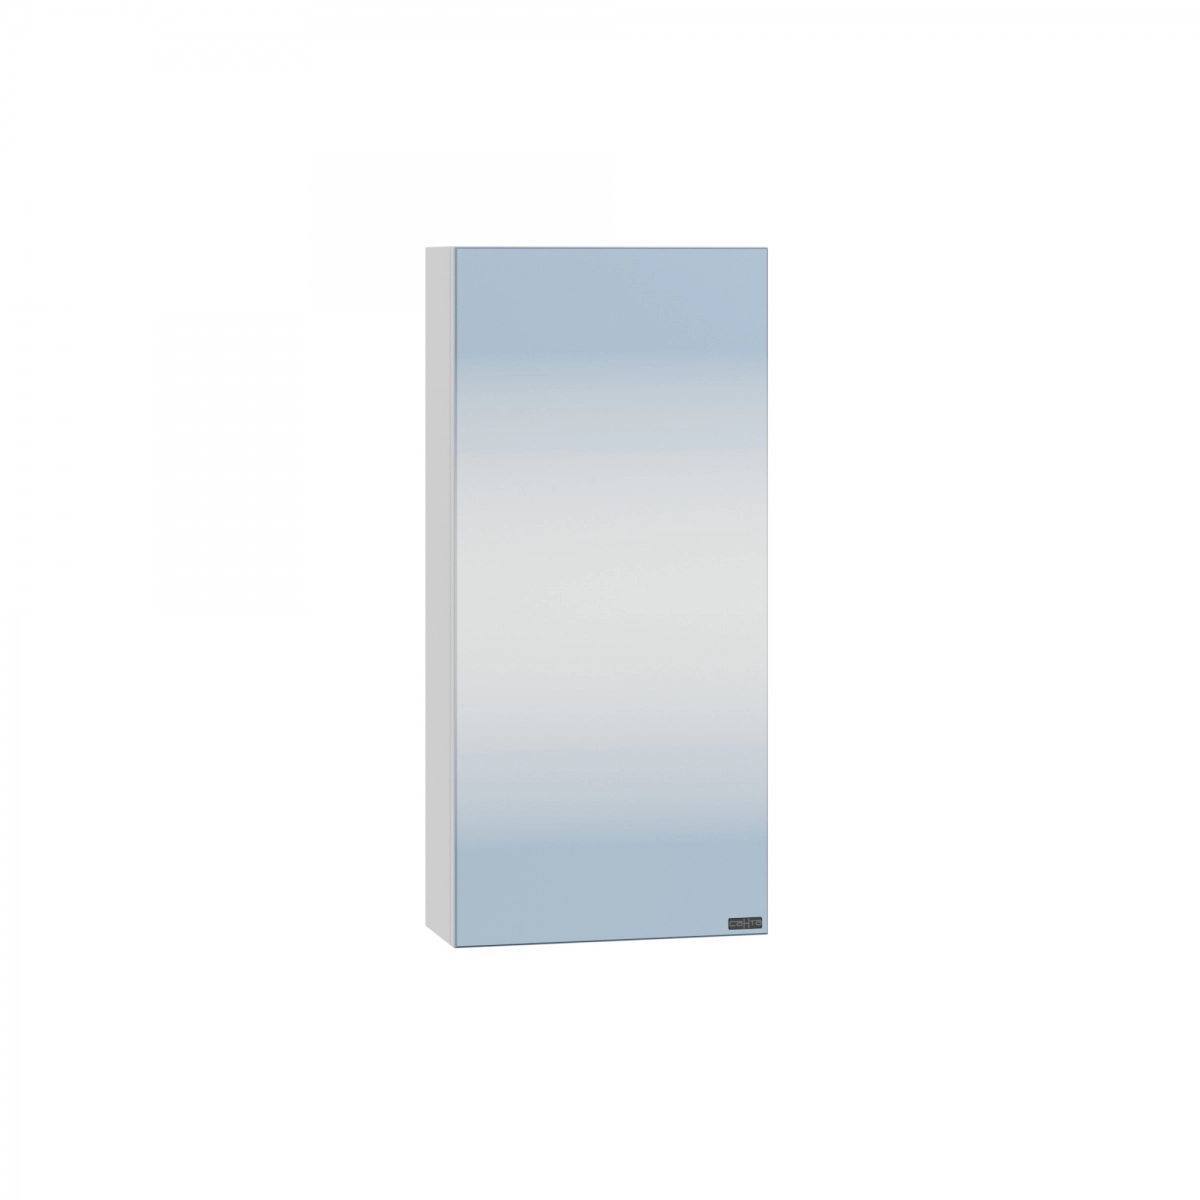 Зеркальный шкаф СанТа Аврора 700330 300*650 мм (белый)